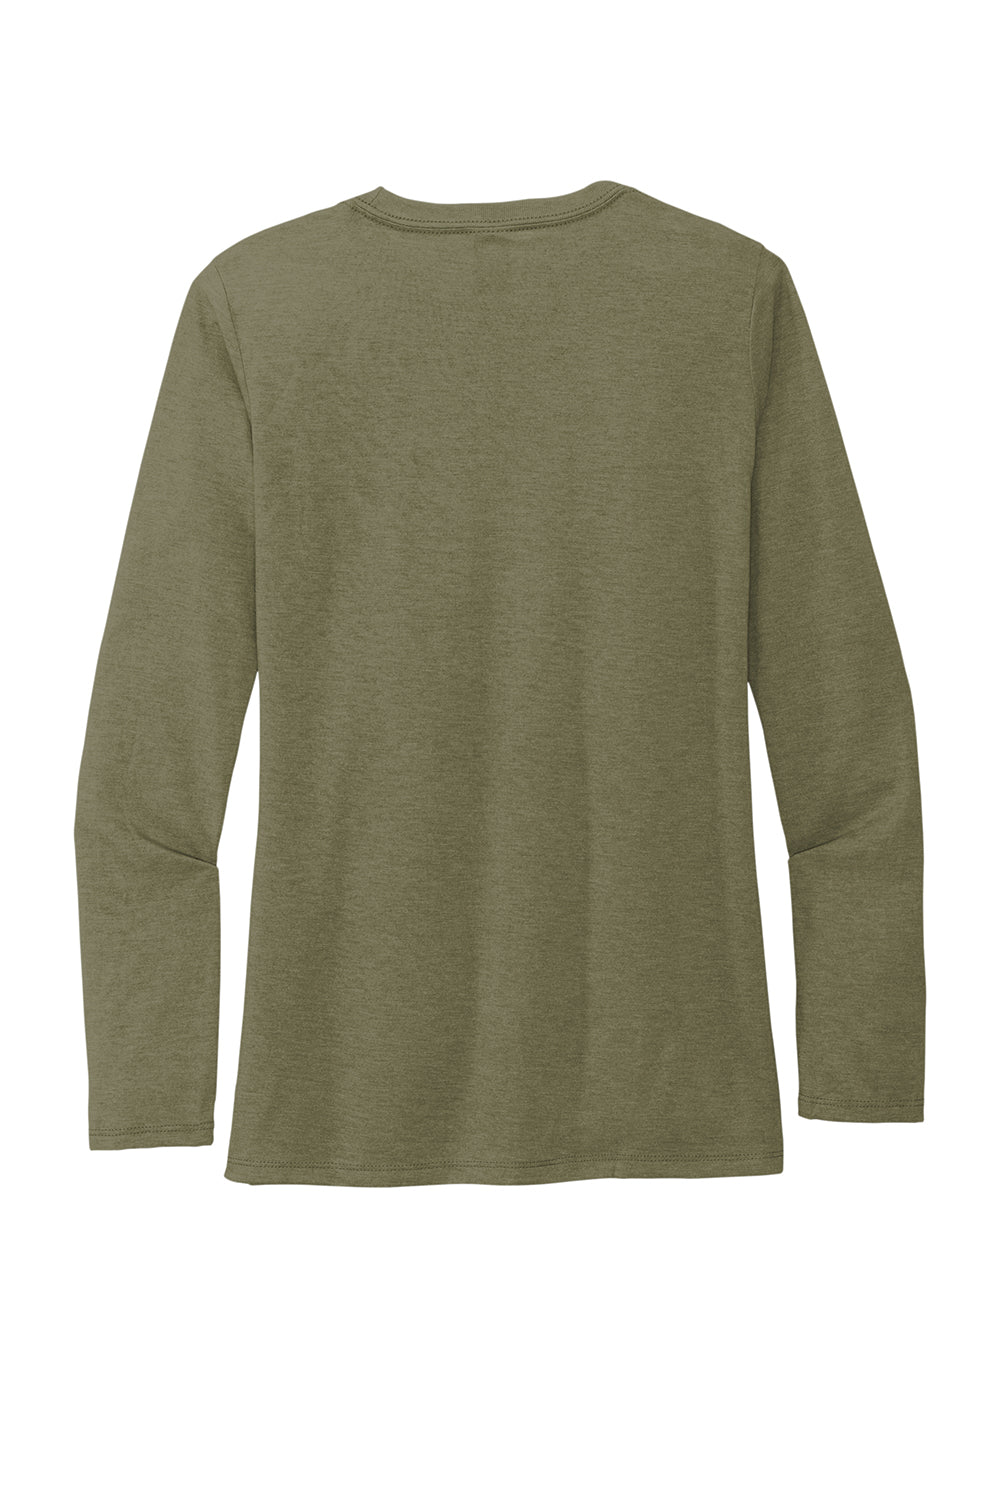 Allmade AL6008 Womens Long Sleeve Crewneck T-Shirt Olive You Green Flat Back